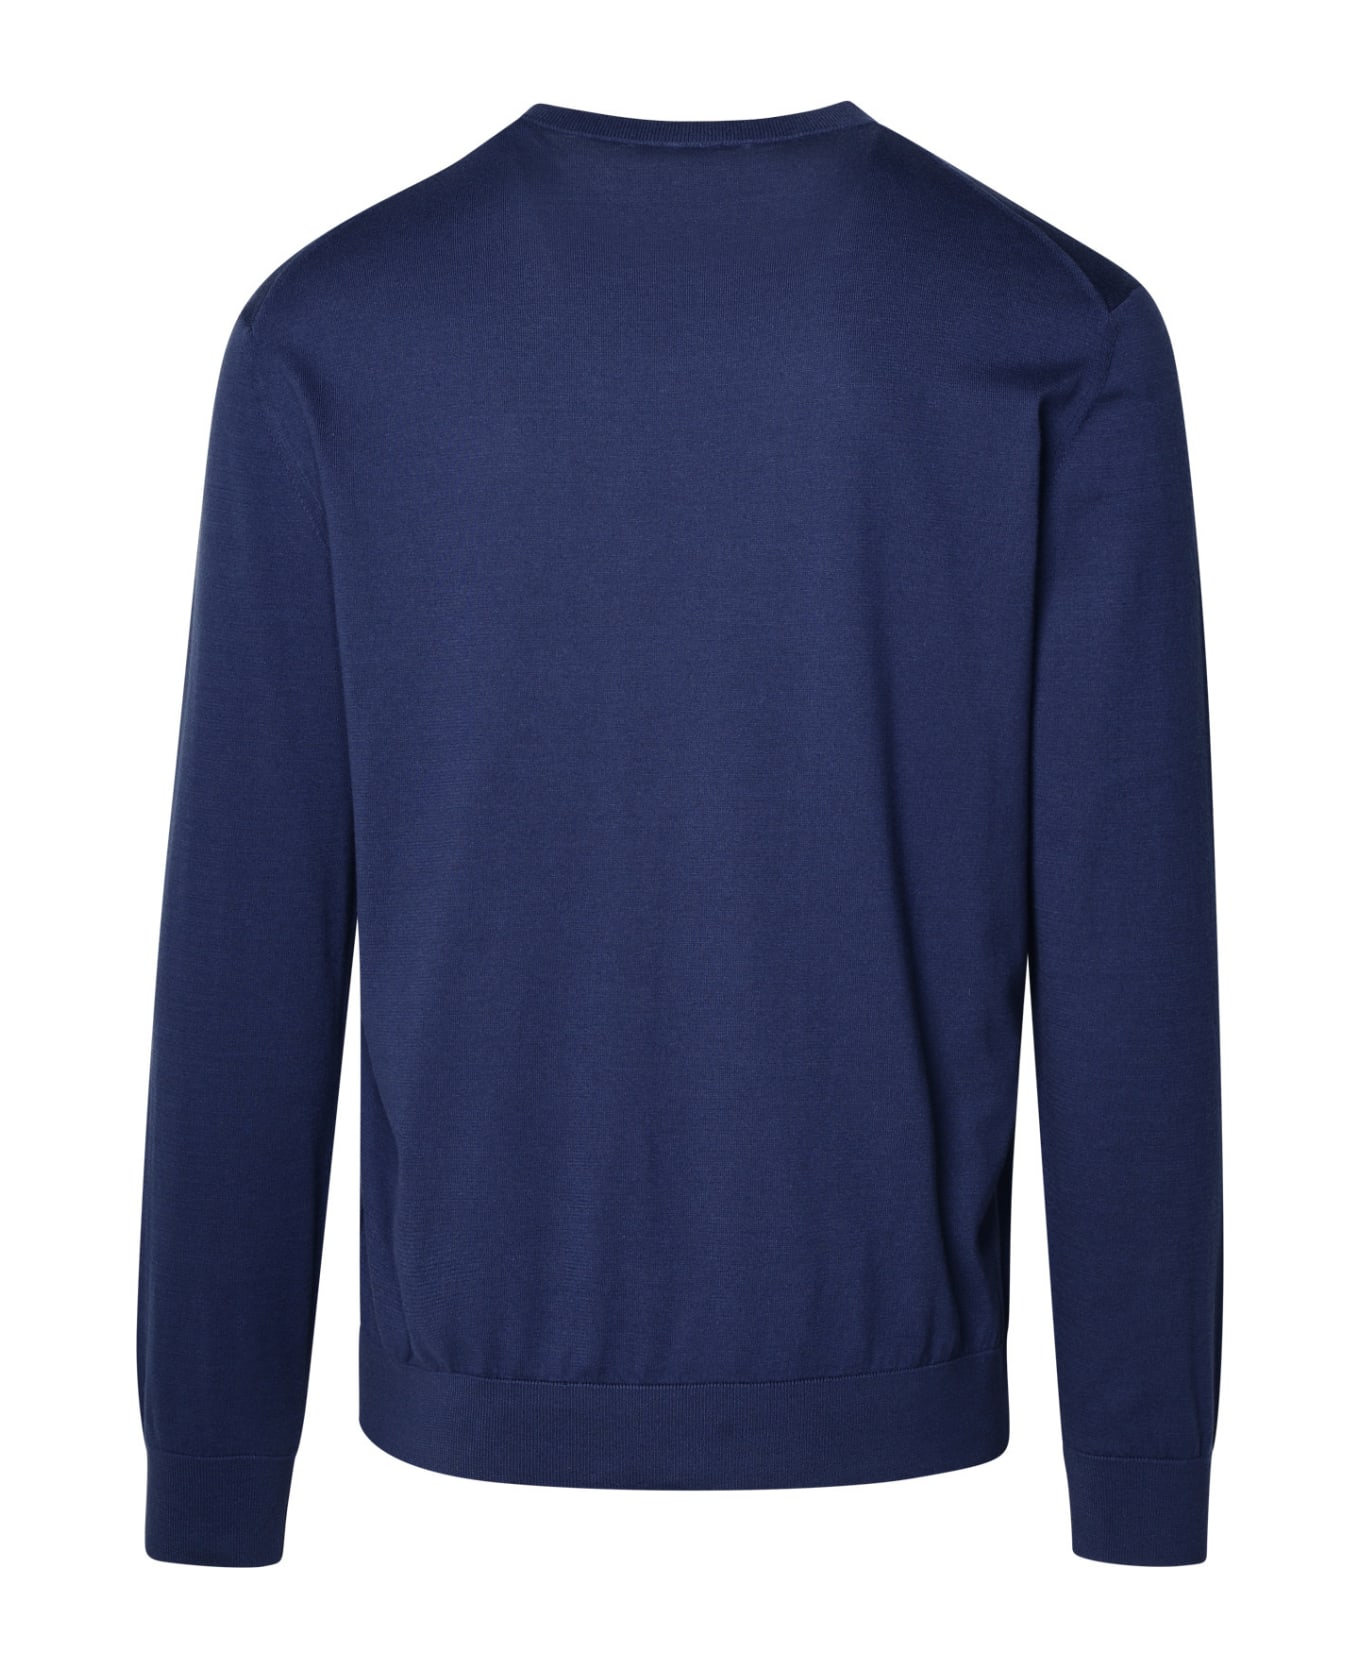 Zegna Blue Cotton Sweater - Blue